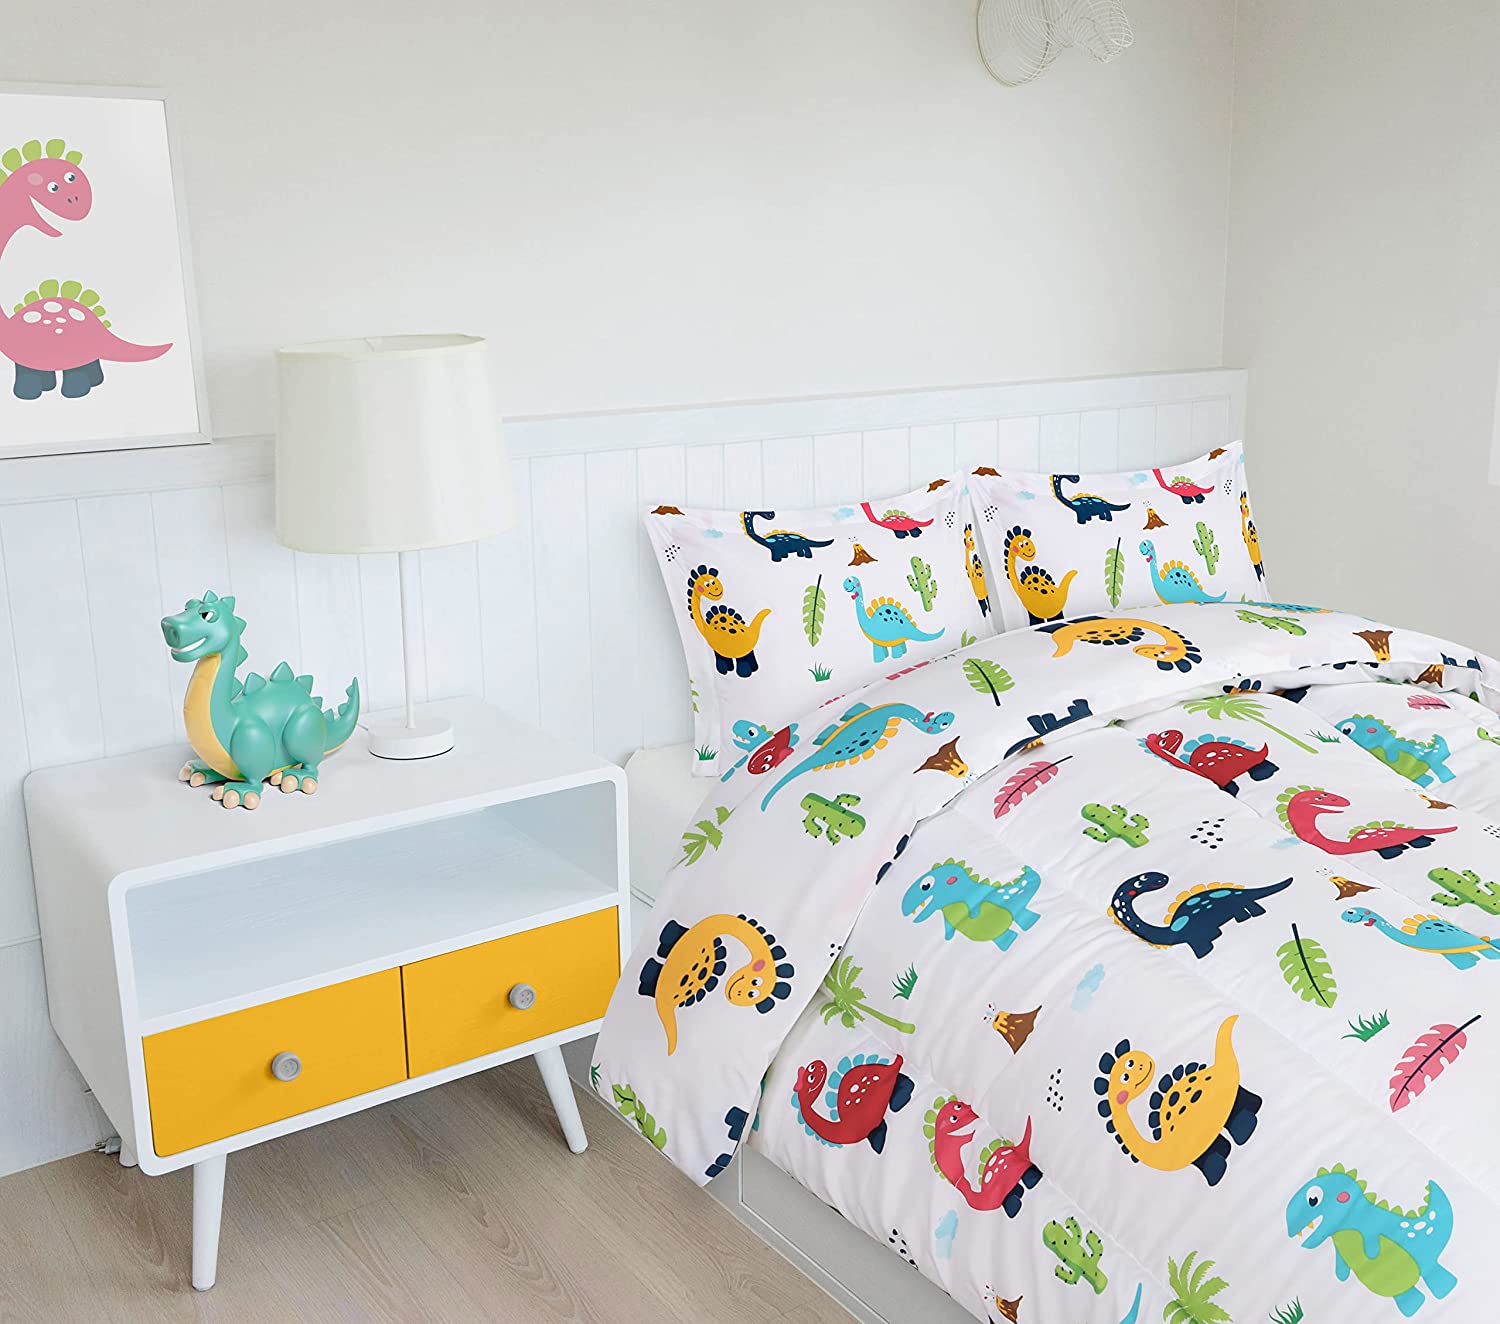 Utopia Bedding Twin Comforter Set Kids (Grey) with 1 Pillow Sham - Bed